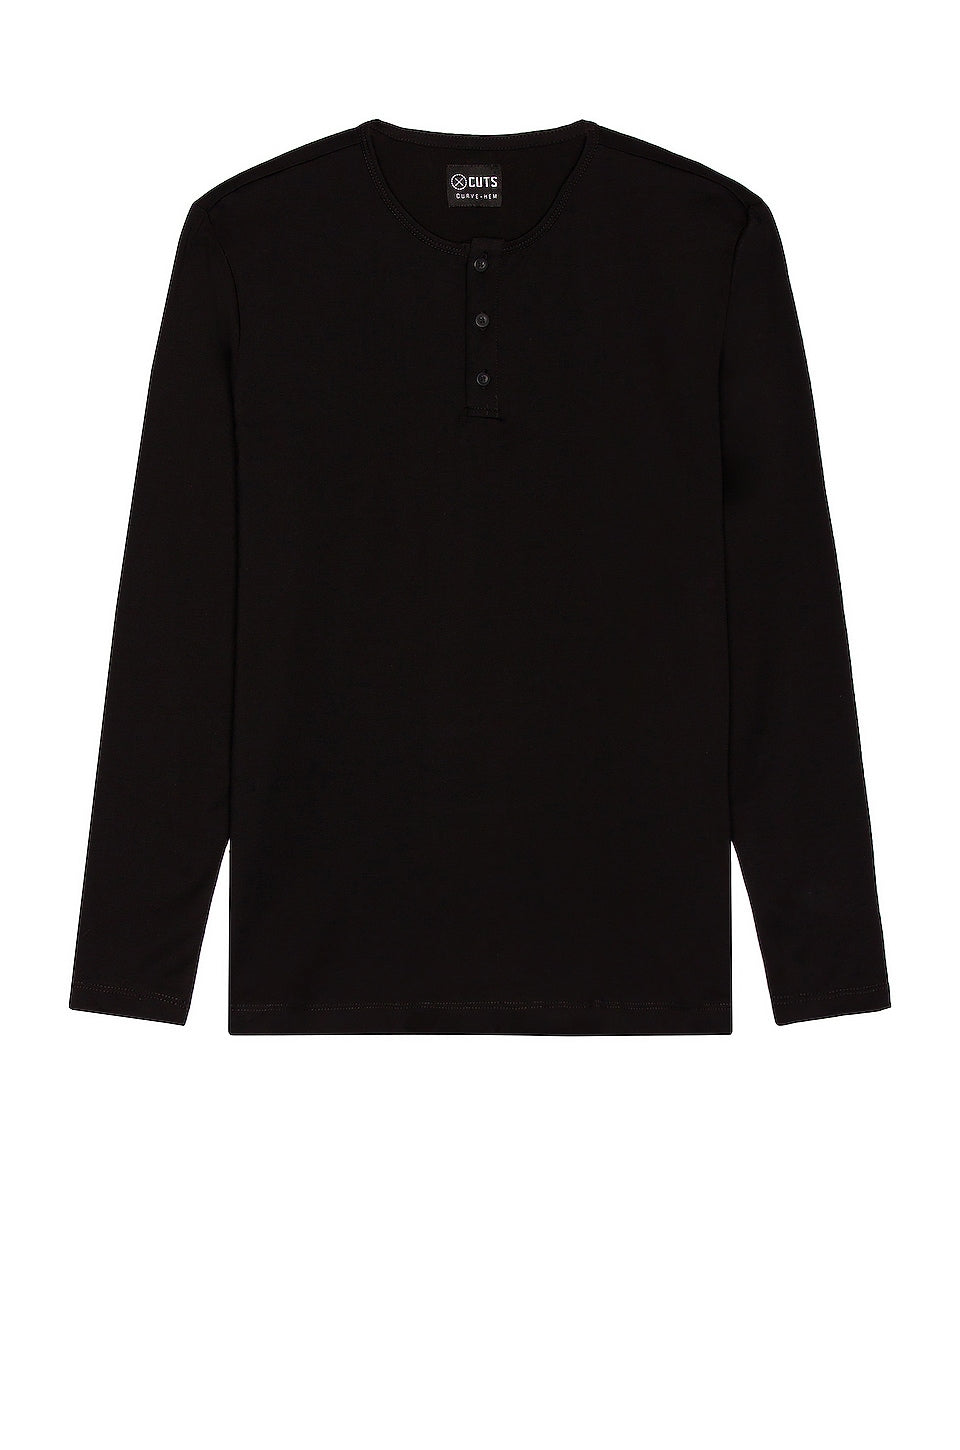 Cuts Long Sleeve Henley Curve Hem T-Shirt in Black Size X-LARGE